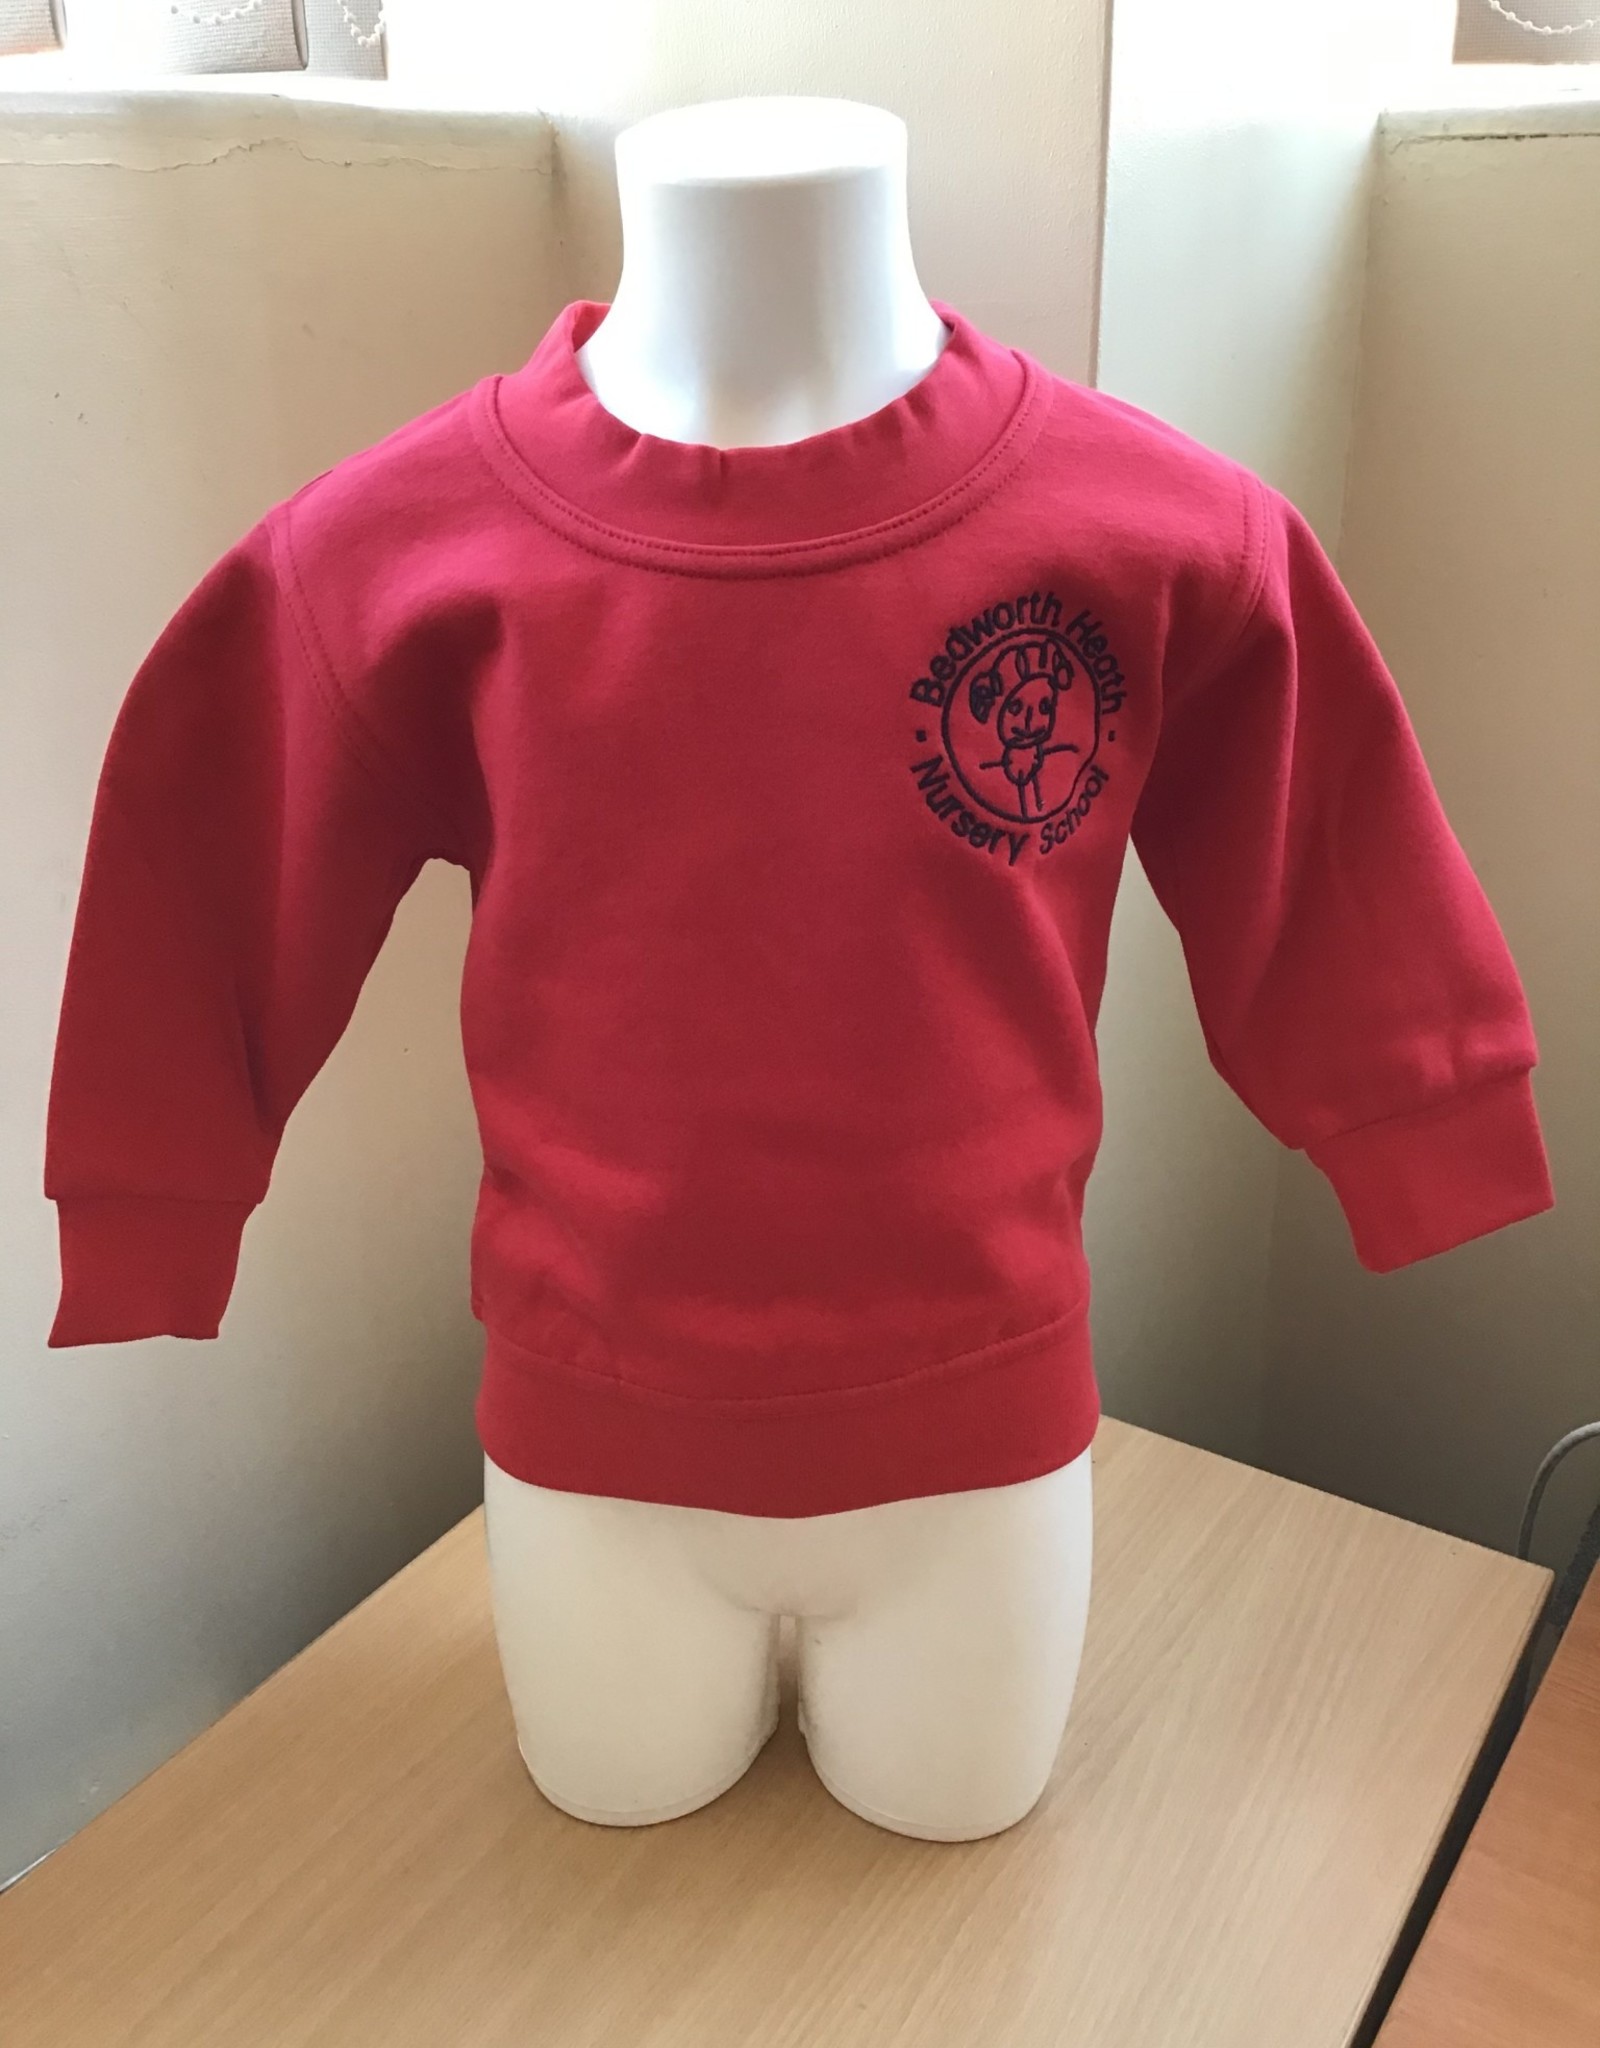 UNEEK Sweatshirt Child Size - Bedworth Heath Nursery School